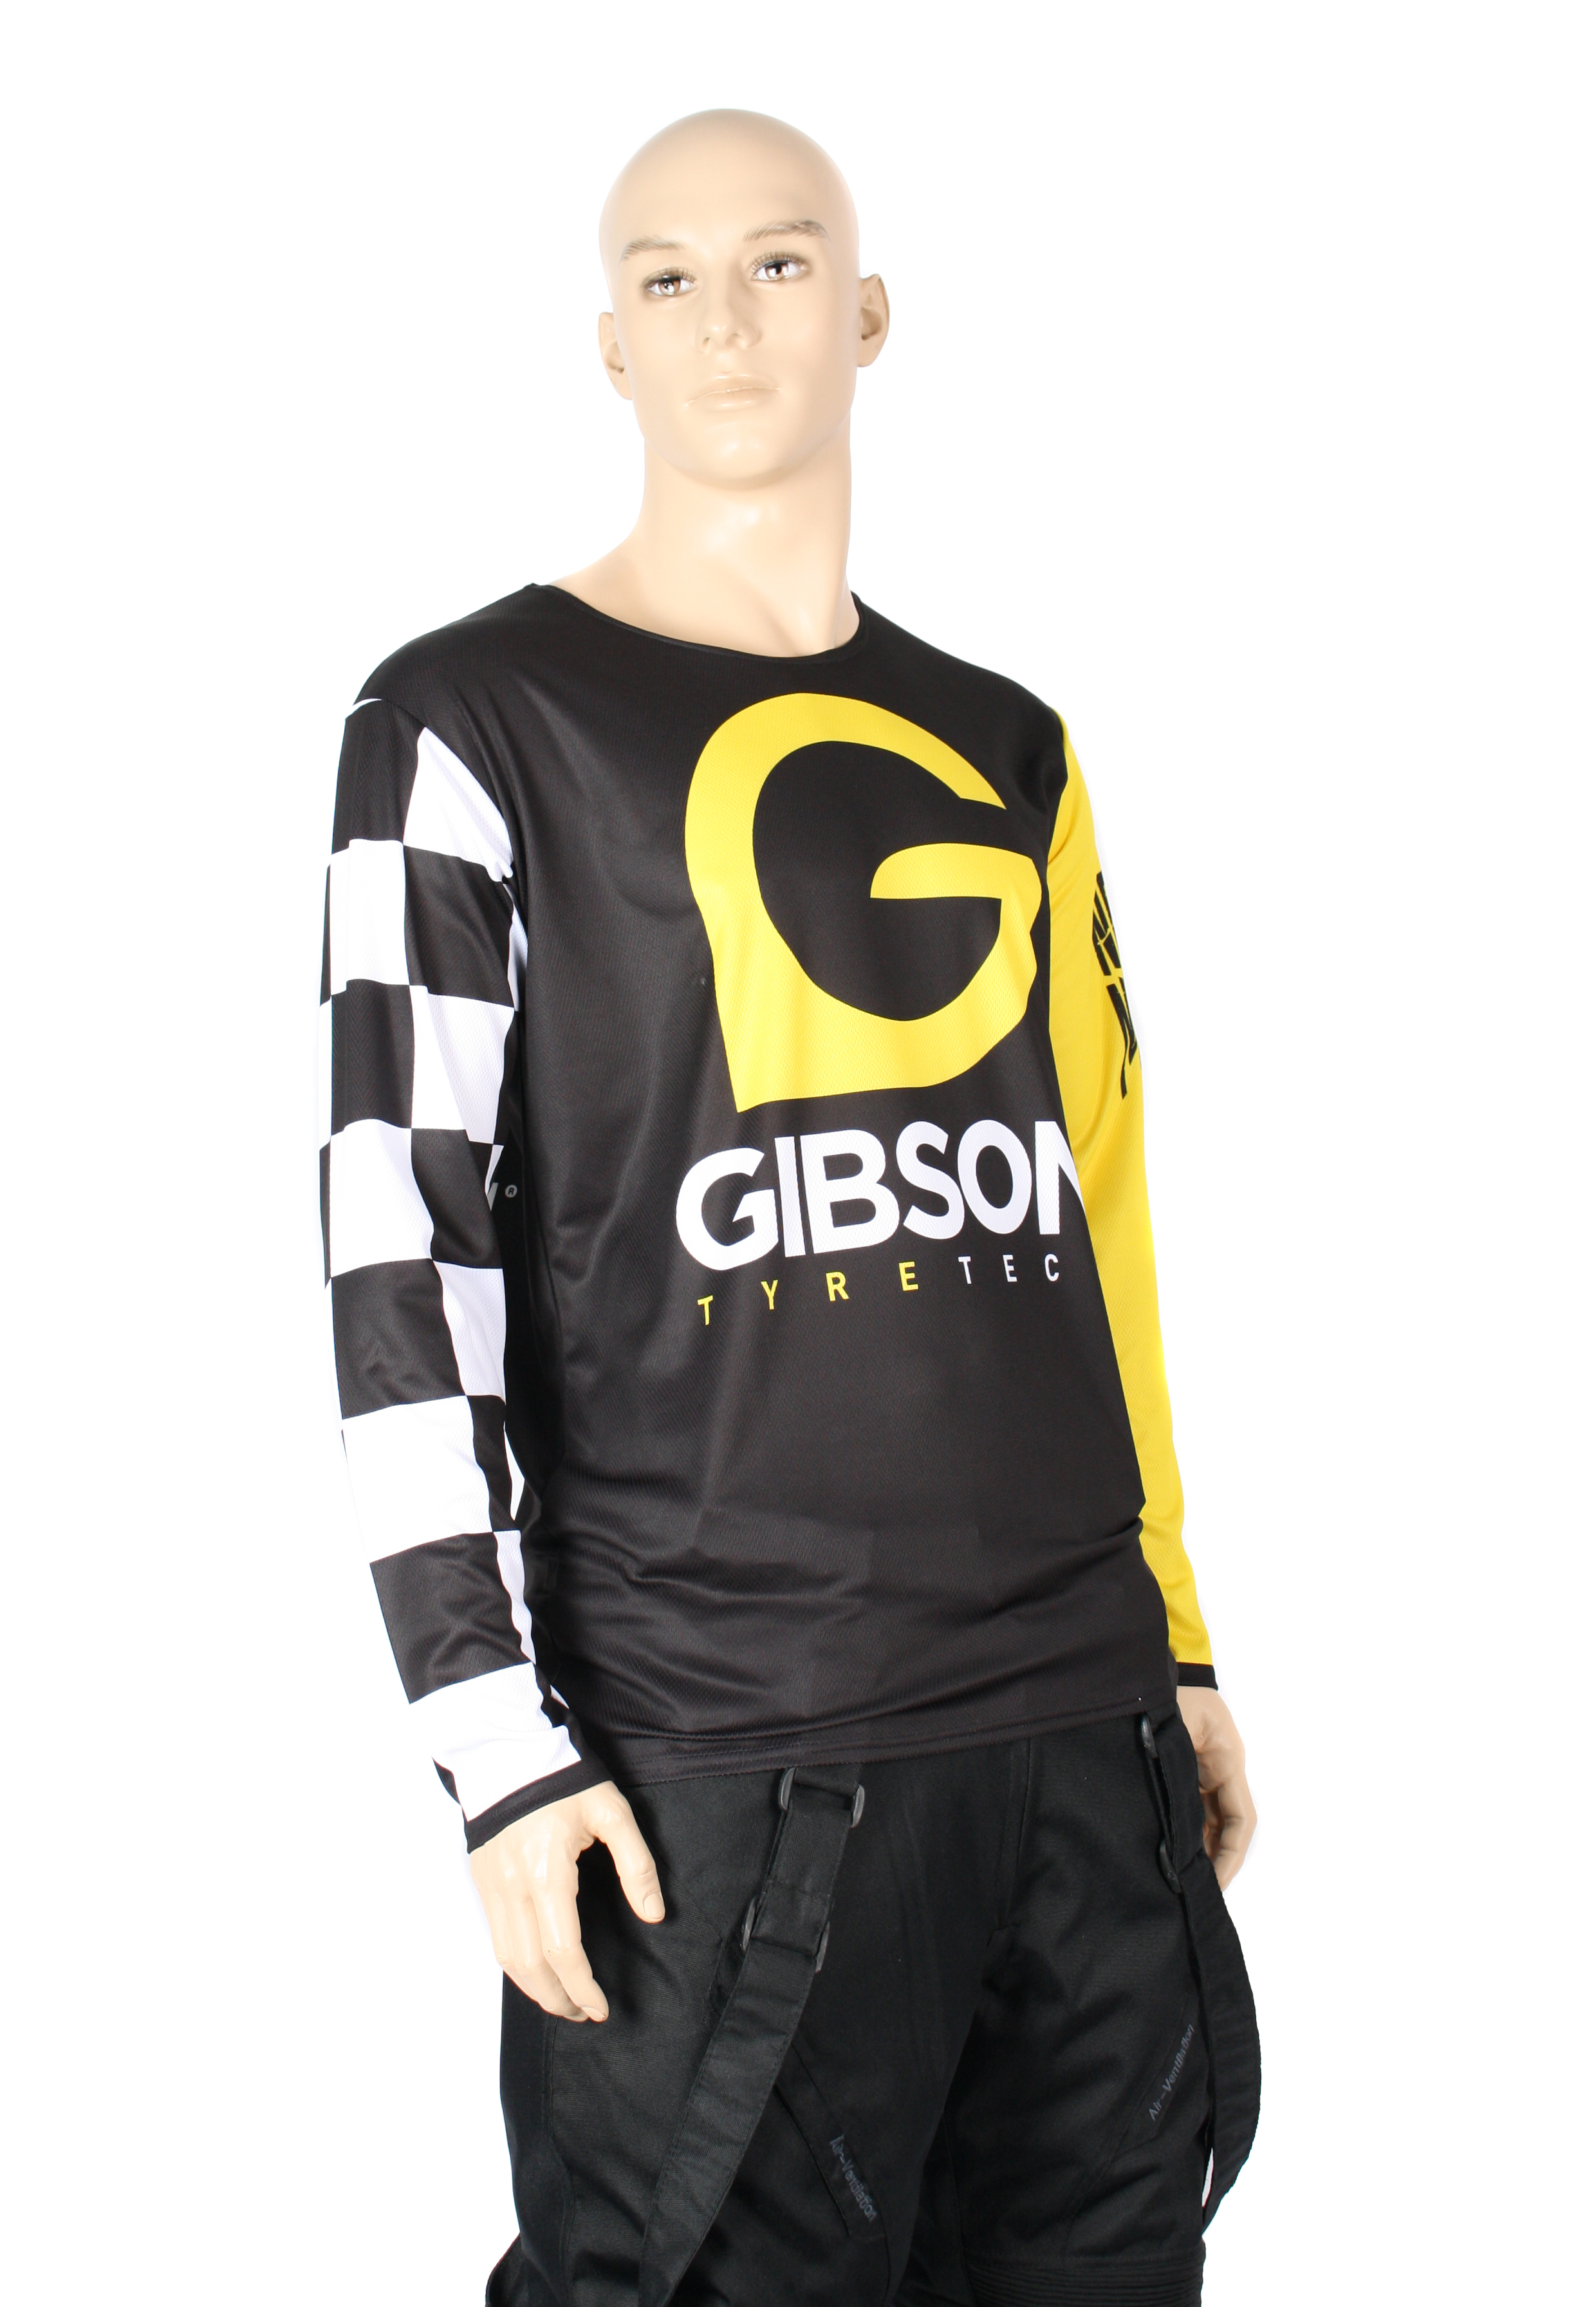 GIBSON Racing Jersey